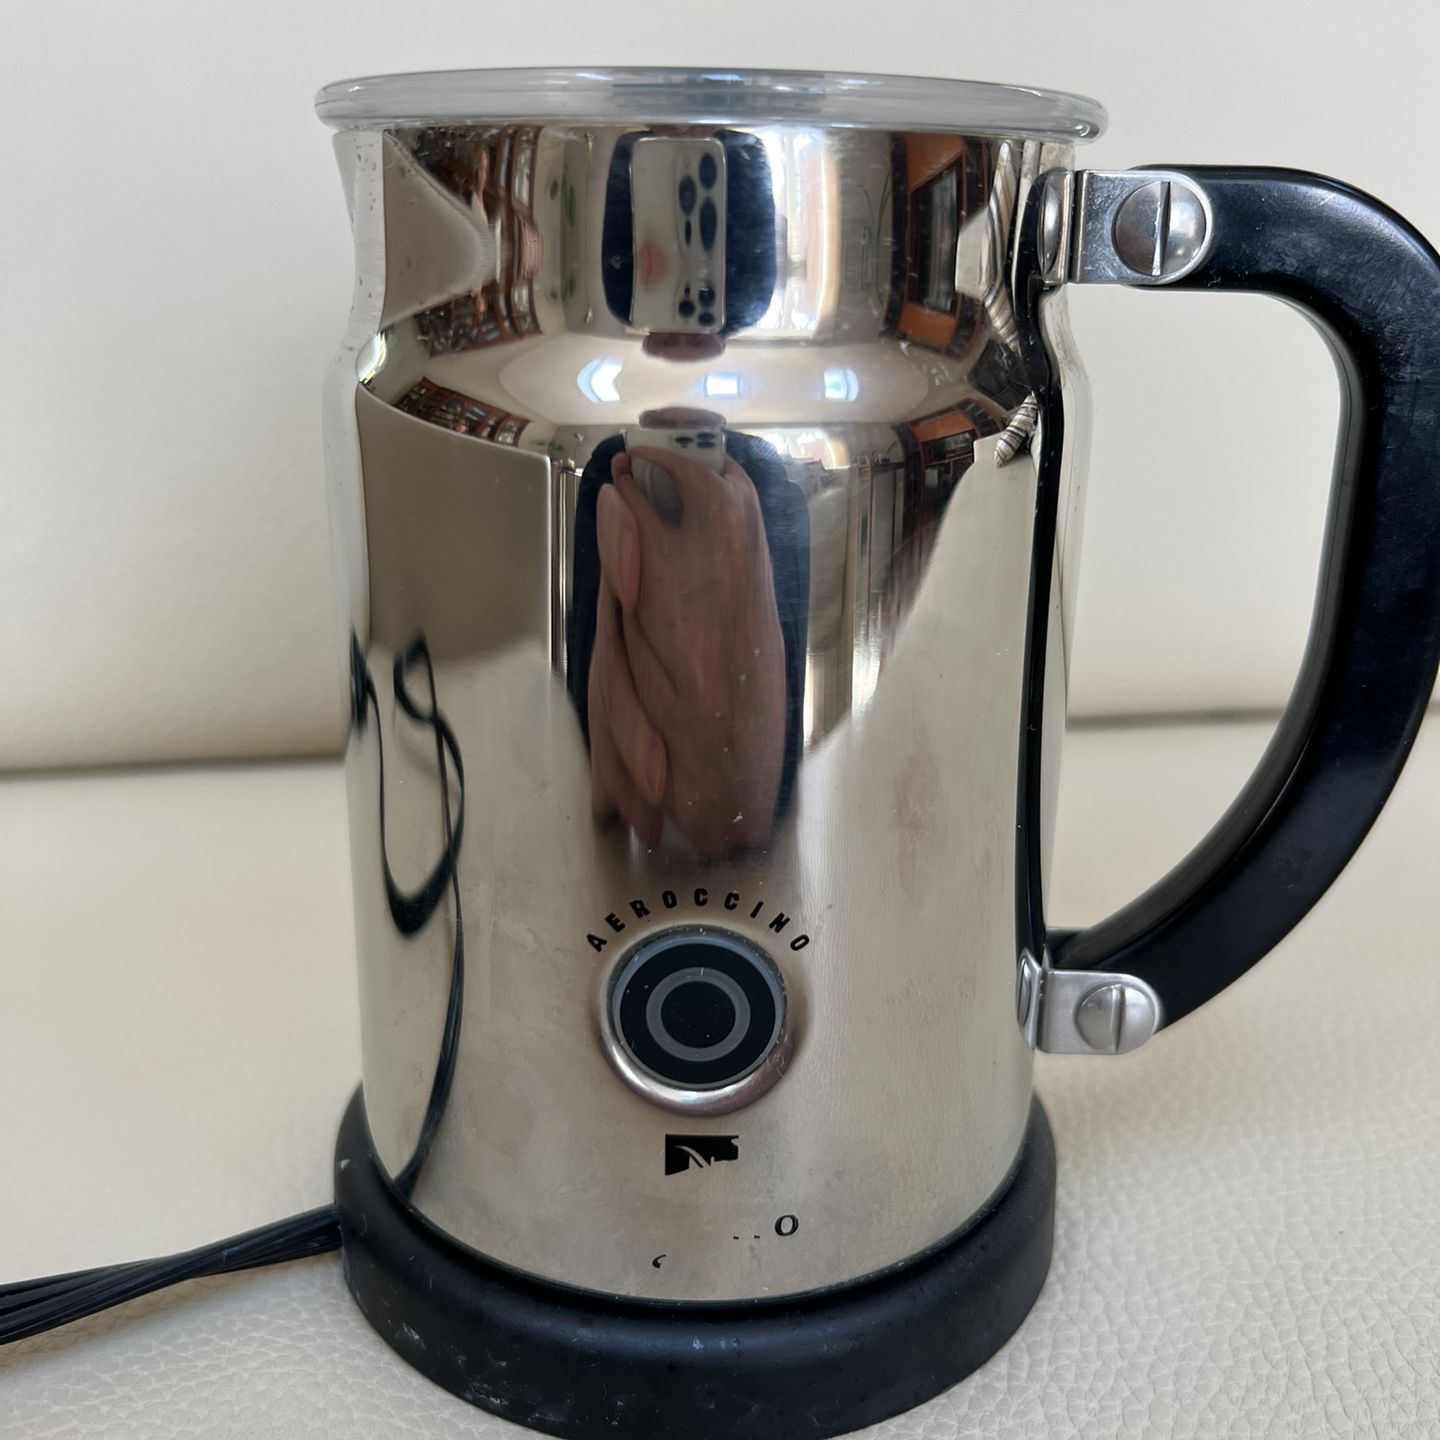 Nespresso Milk Aeroccino Model 3190 for Sale in Yonkers, NY